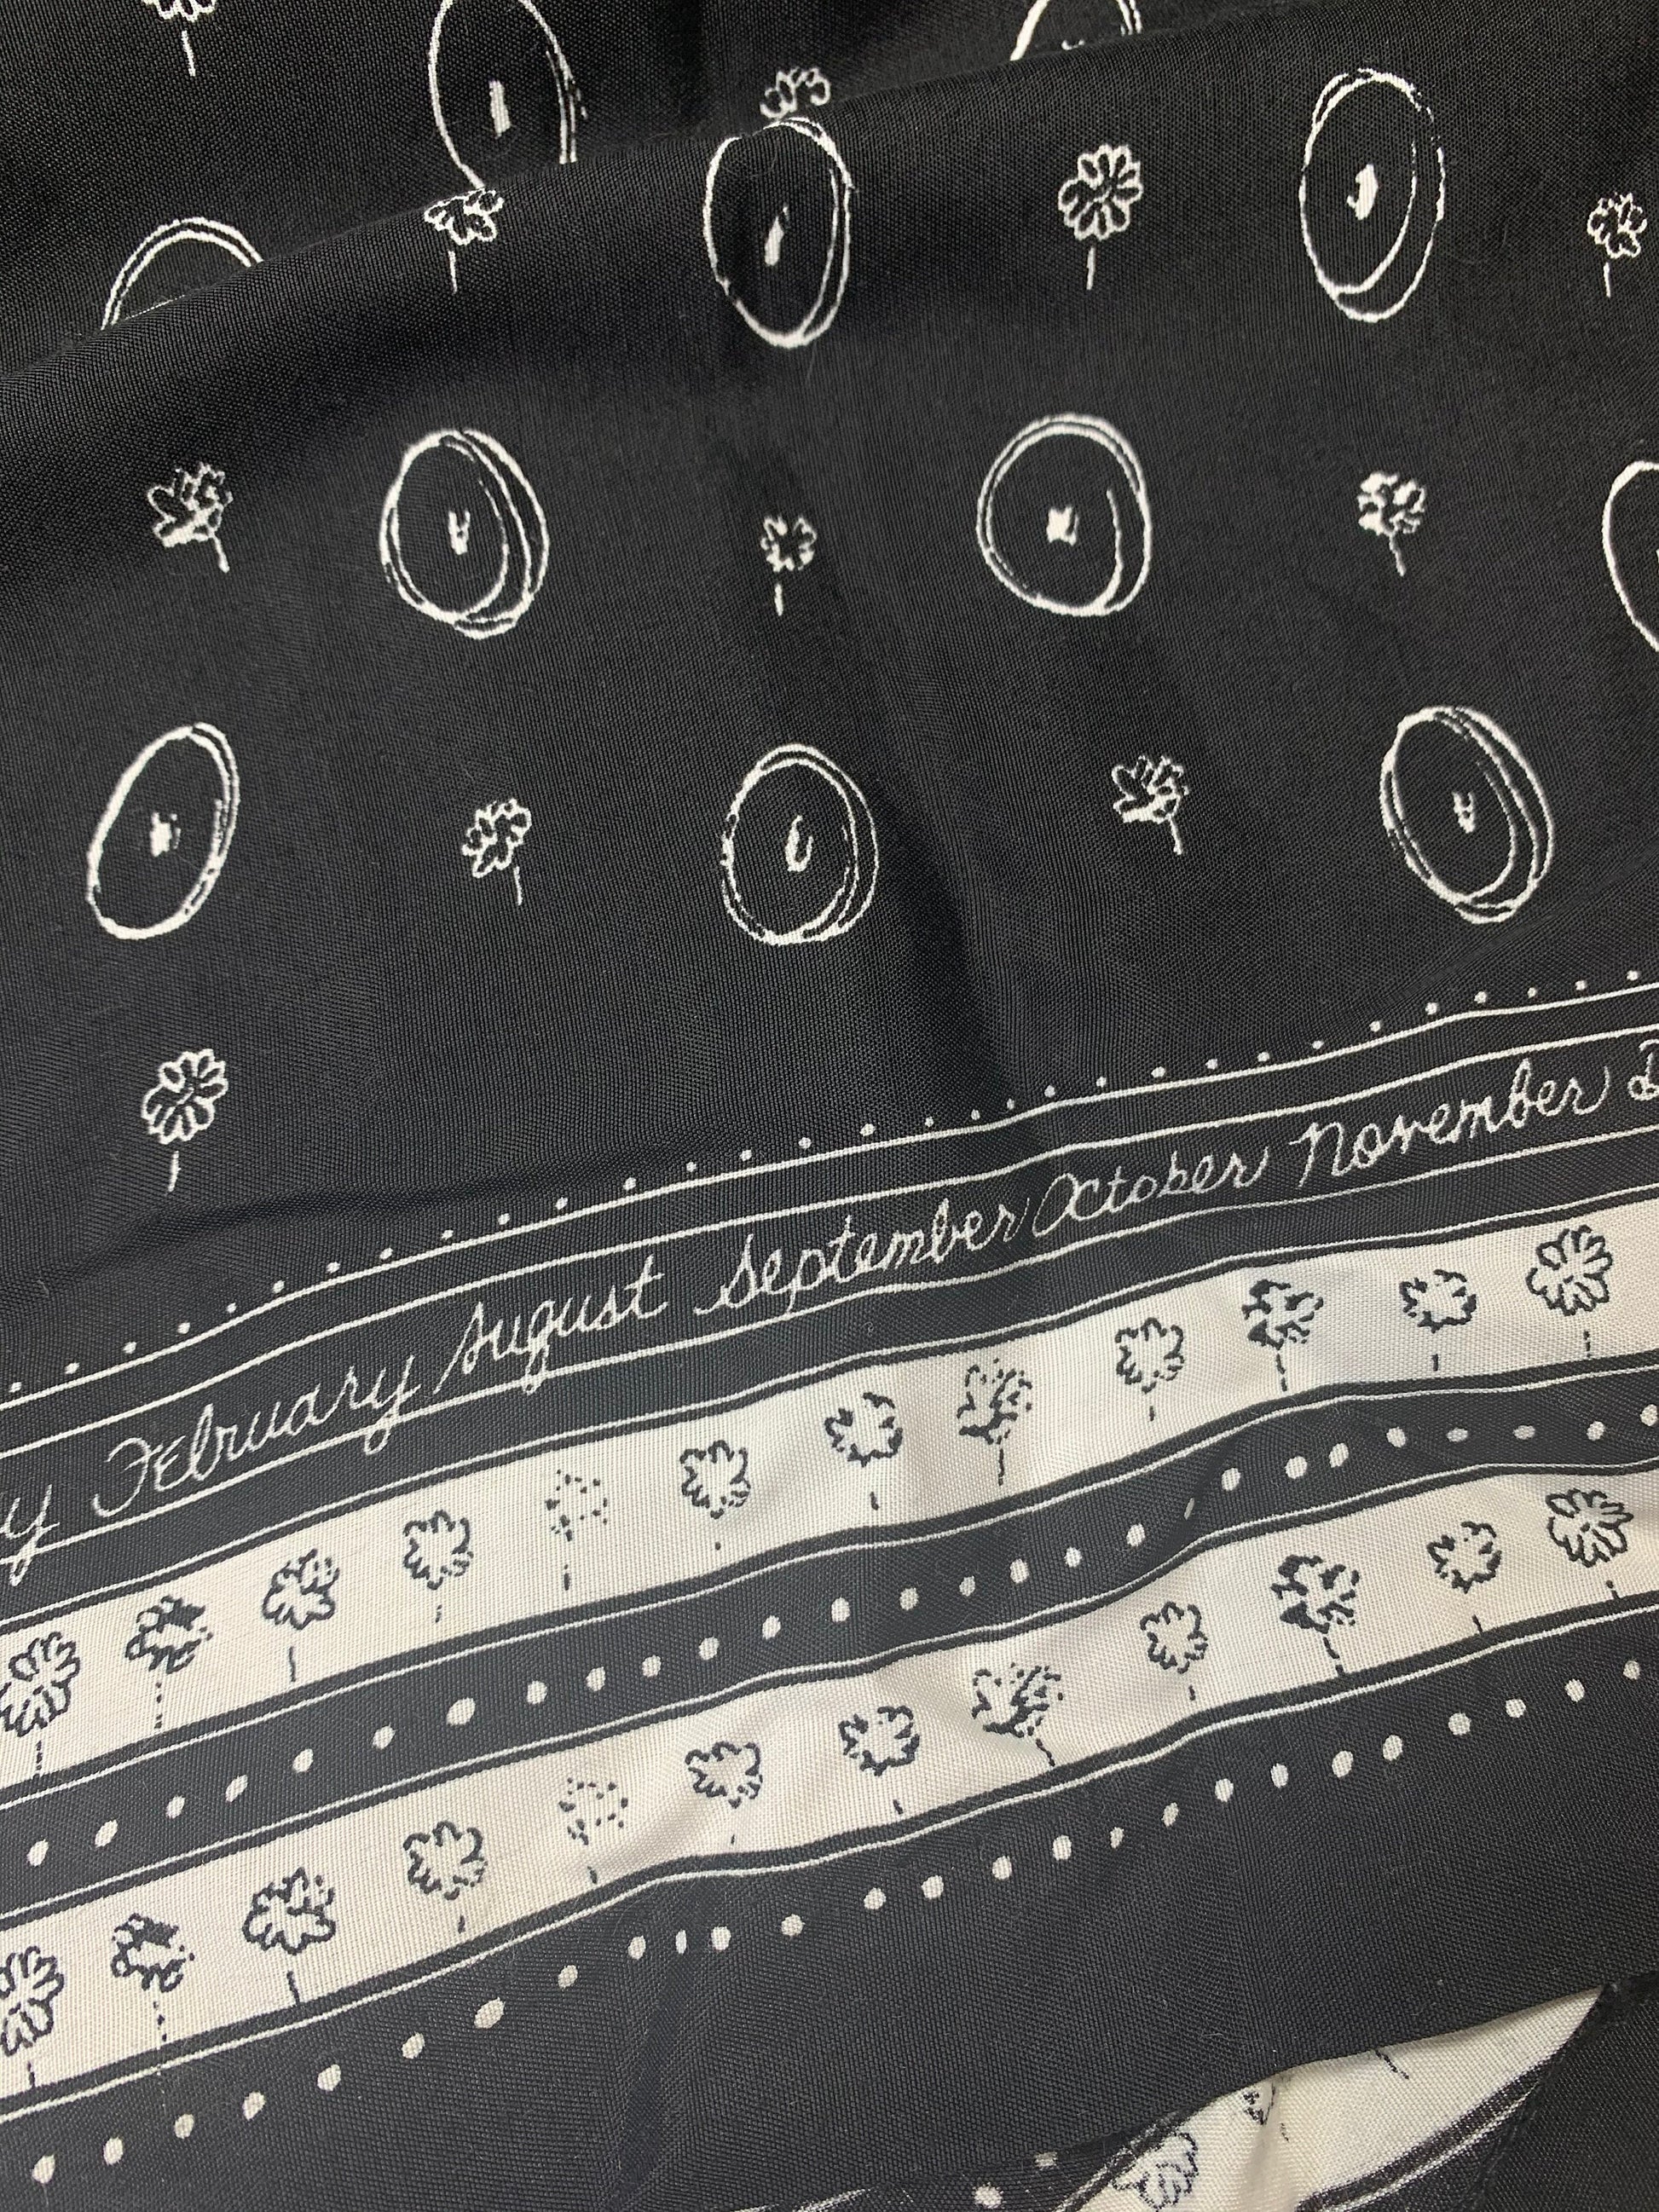 80s Black & White Floral Calendar Print Midi Dress - Medium | Vintage Circle Pattern Pleated Short Sleeve Grunge Dress